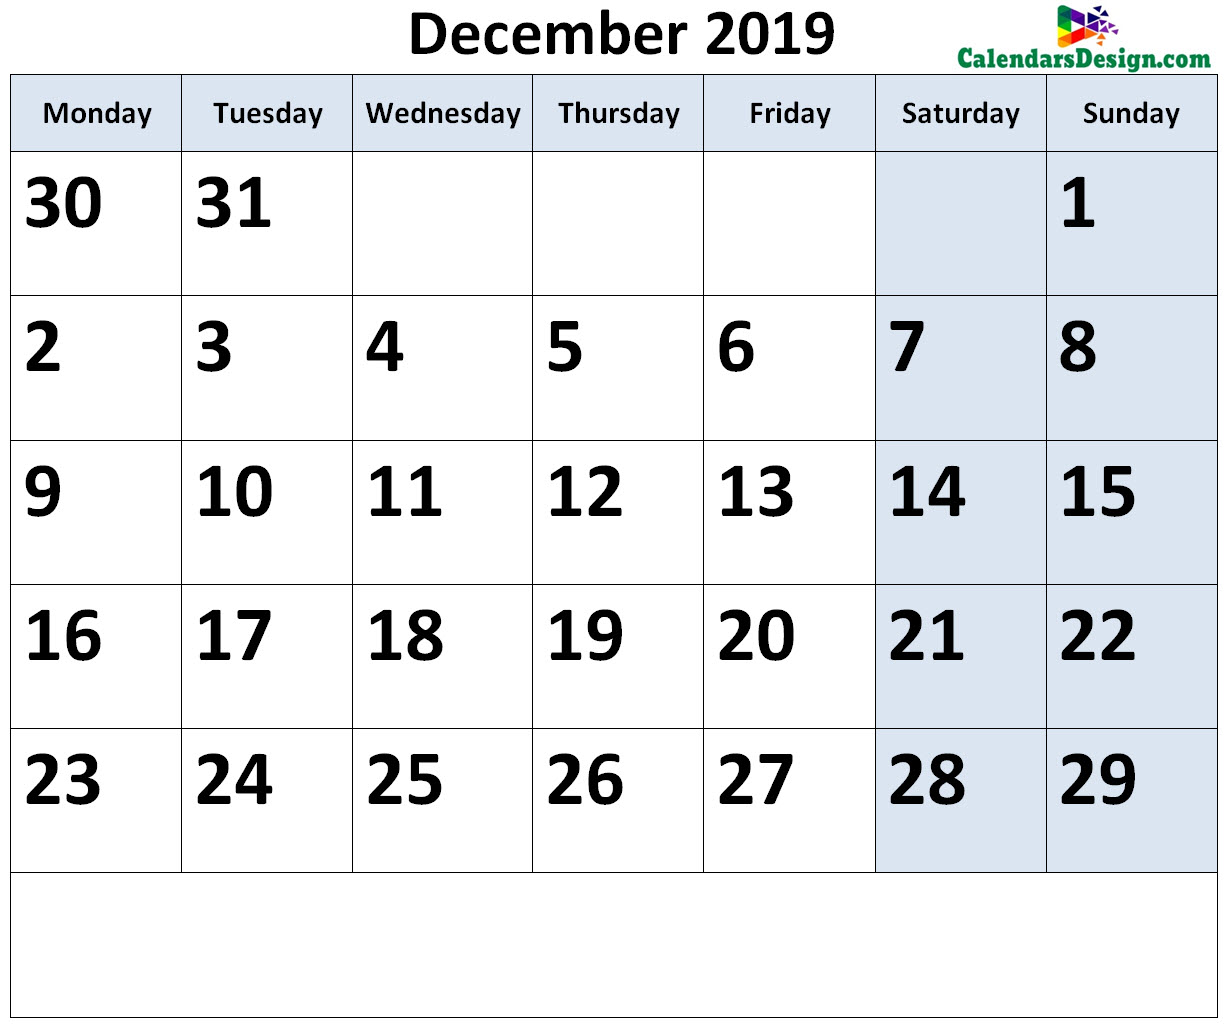 December 2019 Calendar Page